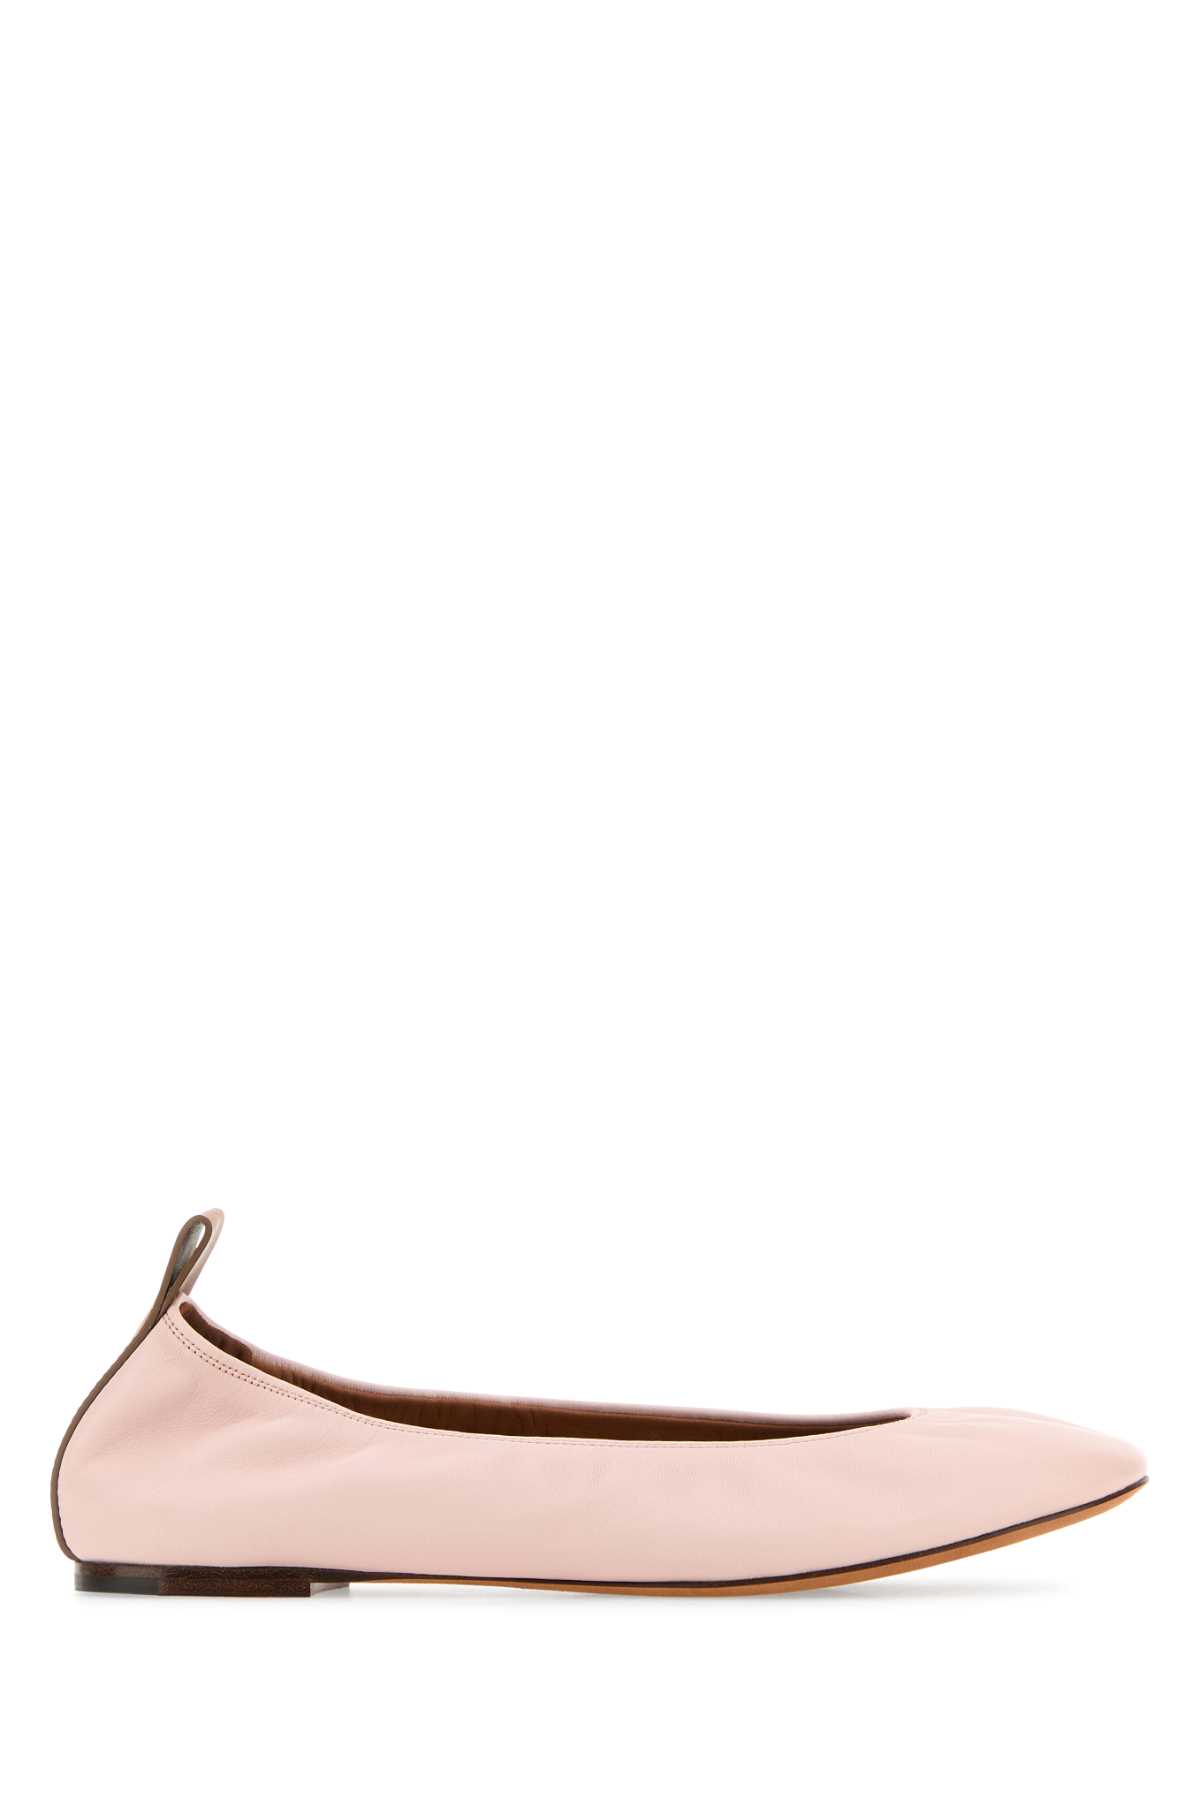 Lanvin woven-raffia ballerina shoes - Brown